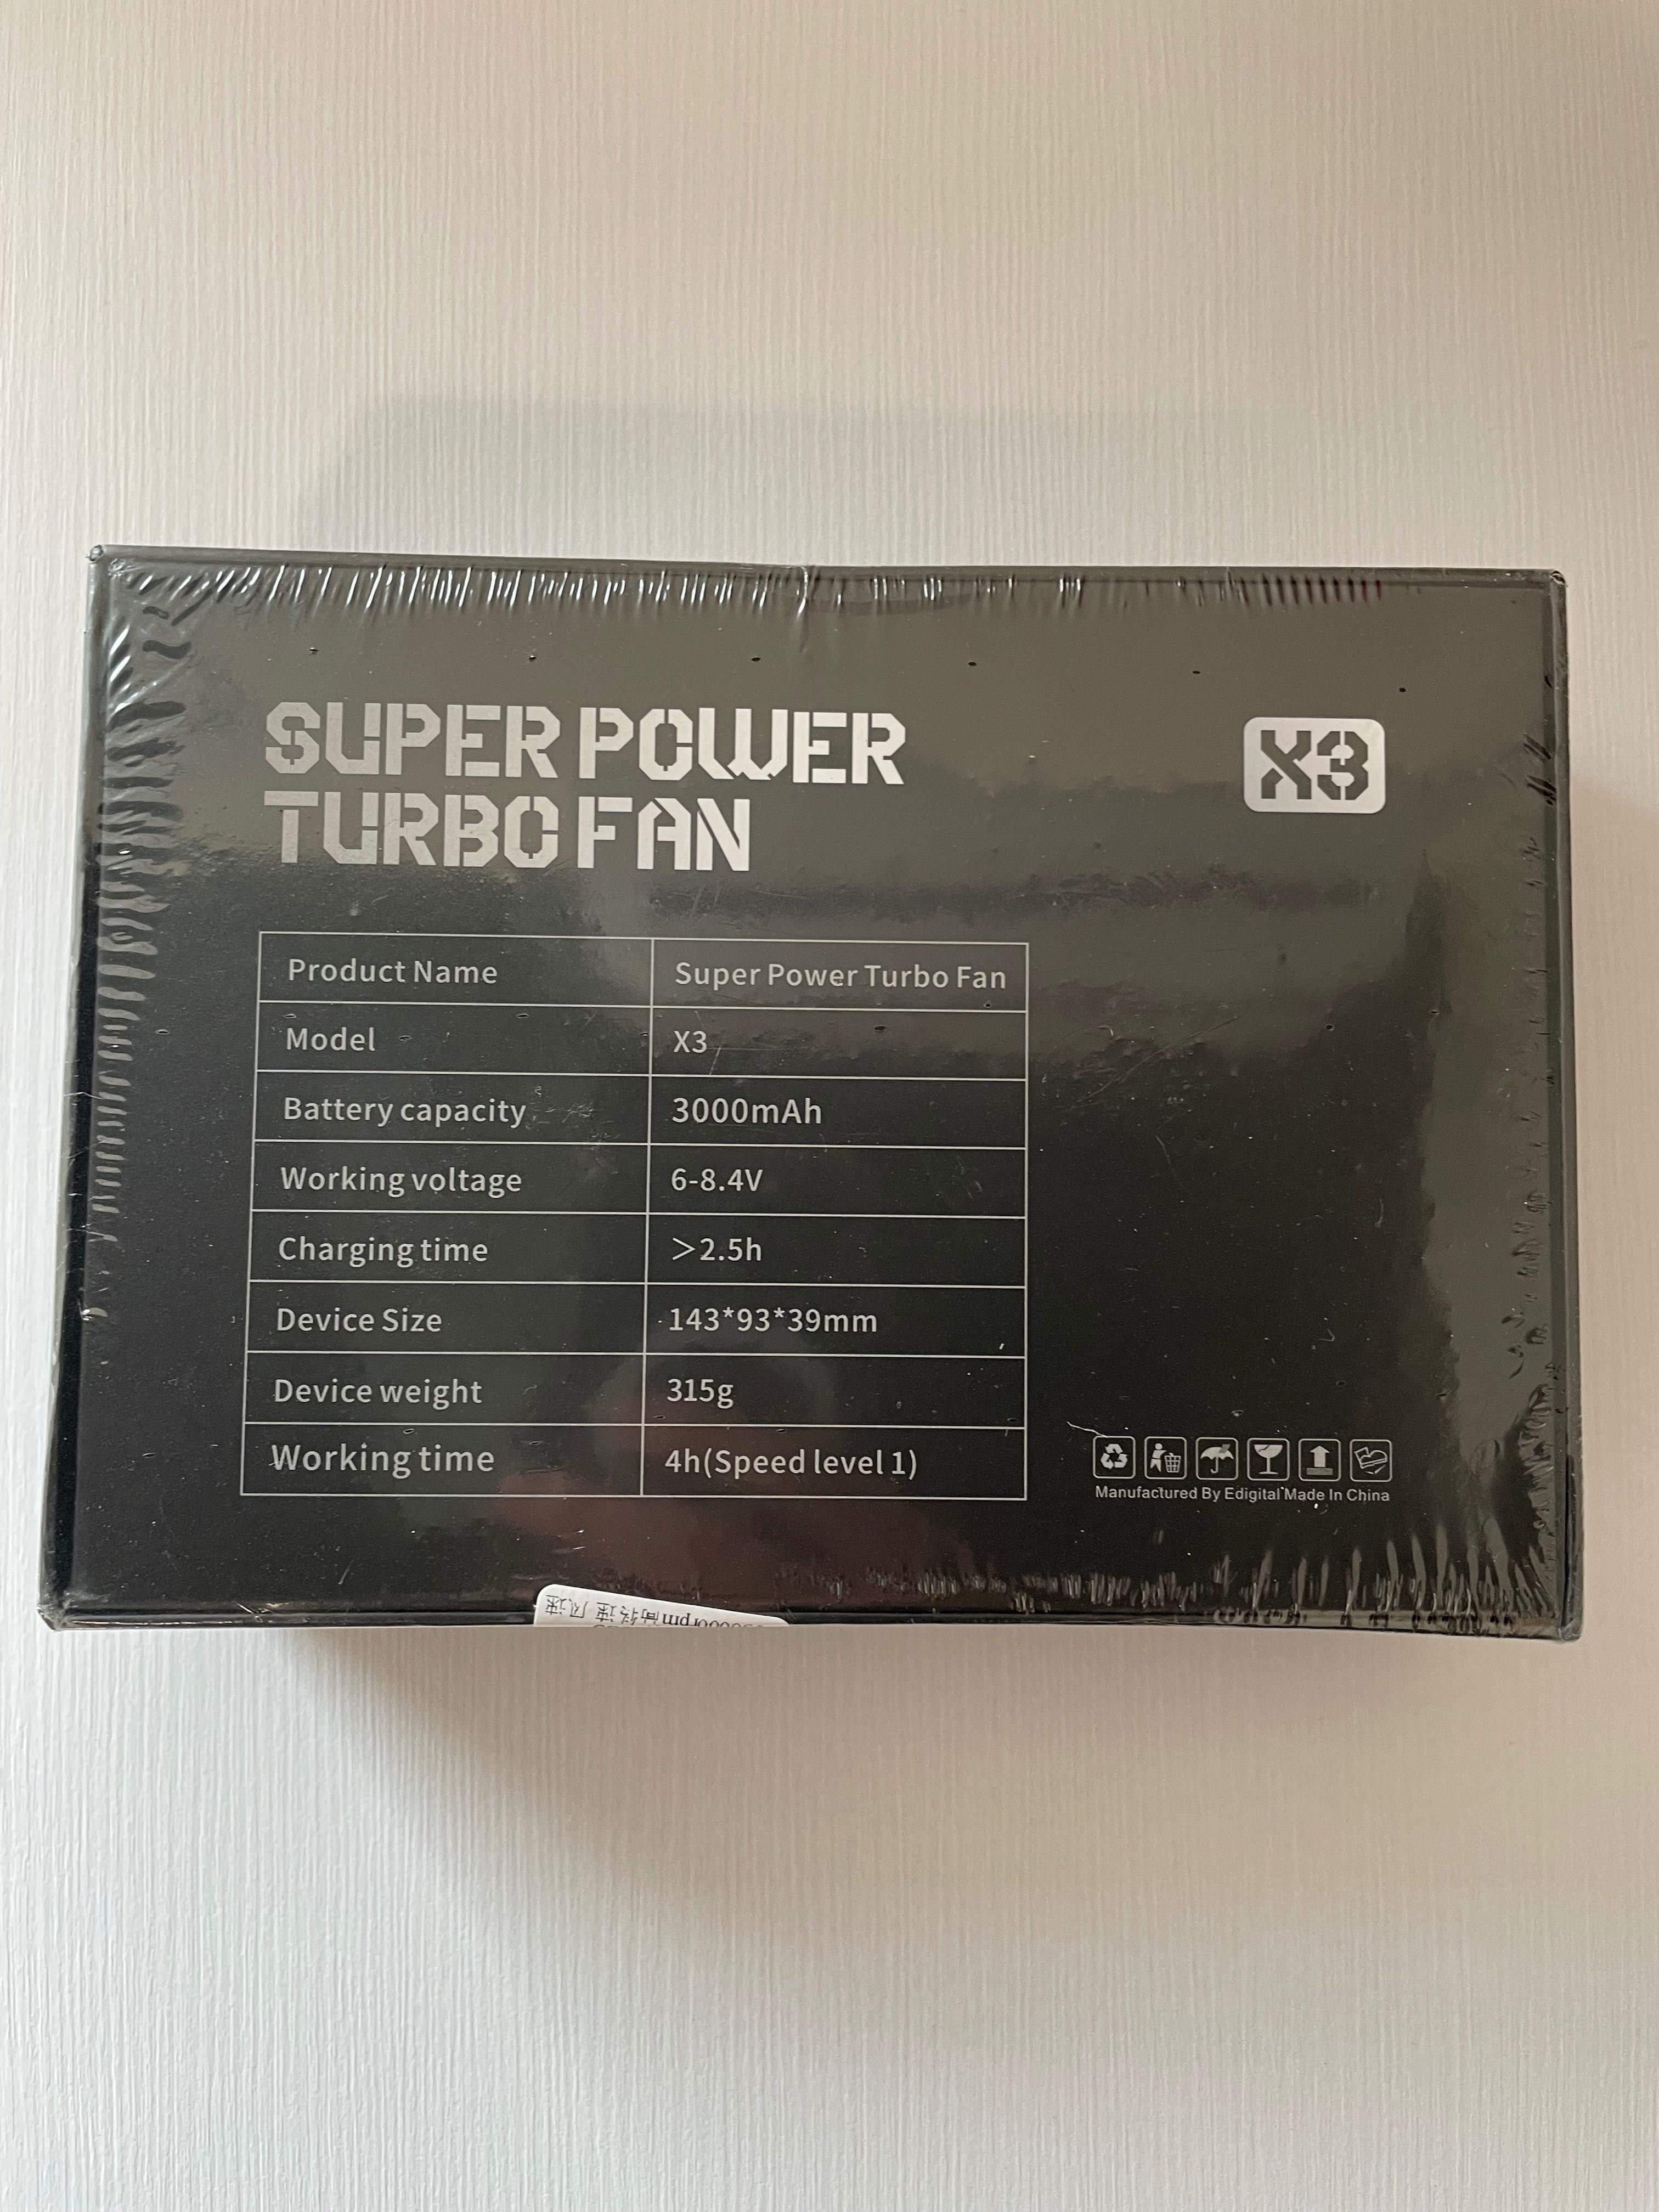 Super power turbo fan X3 / Turbo jet x3